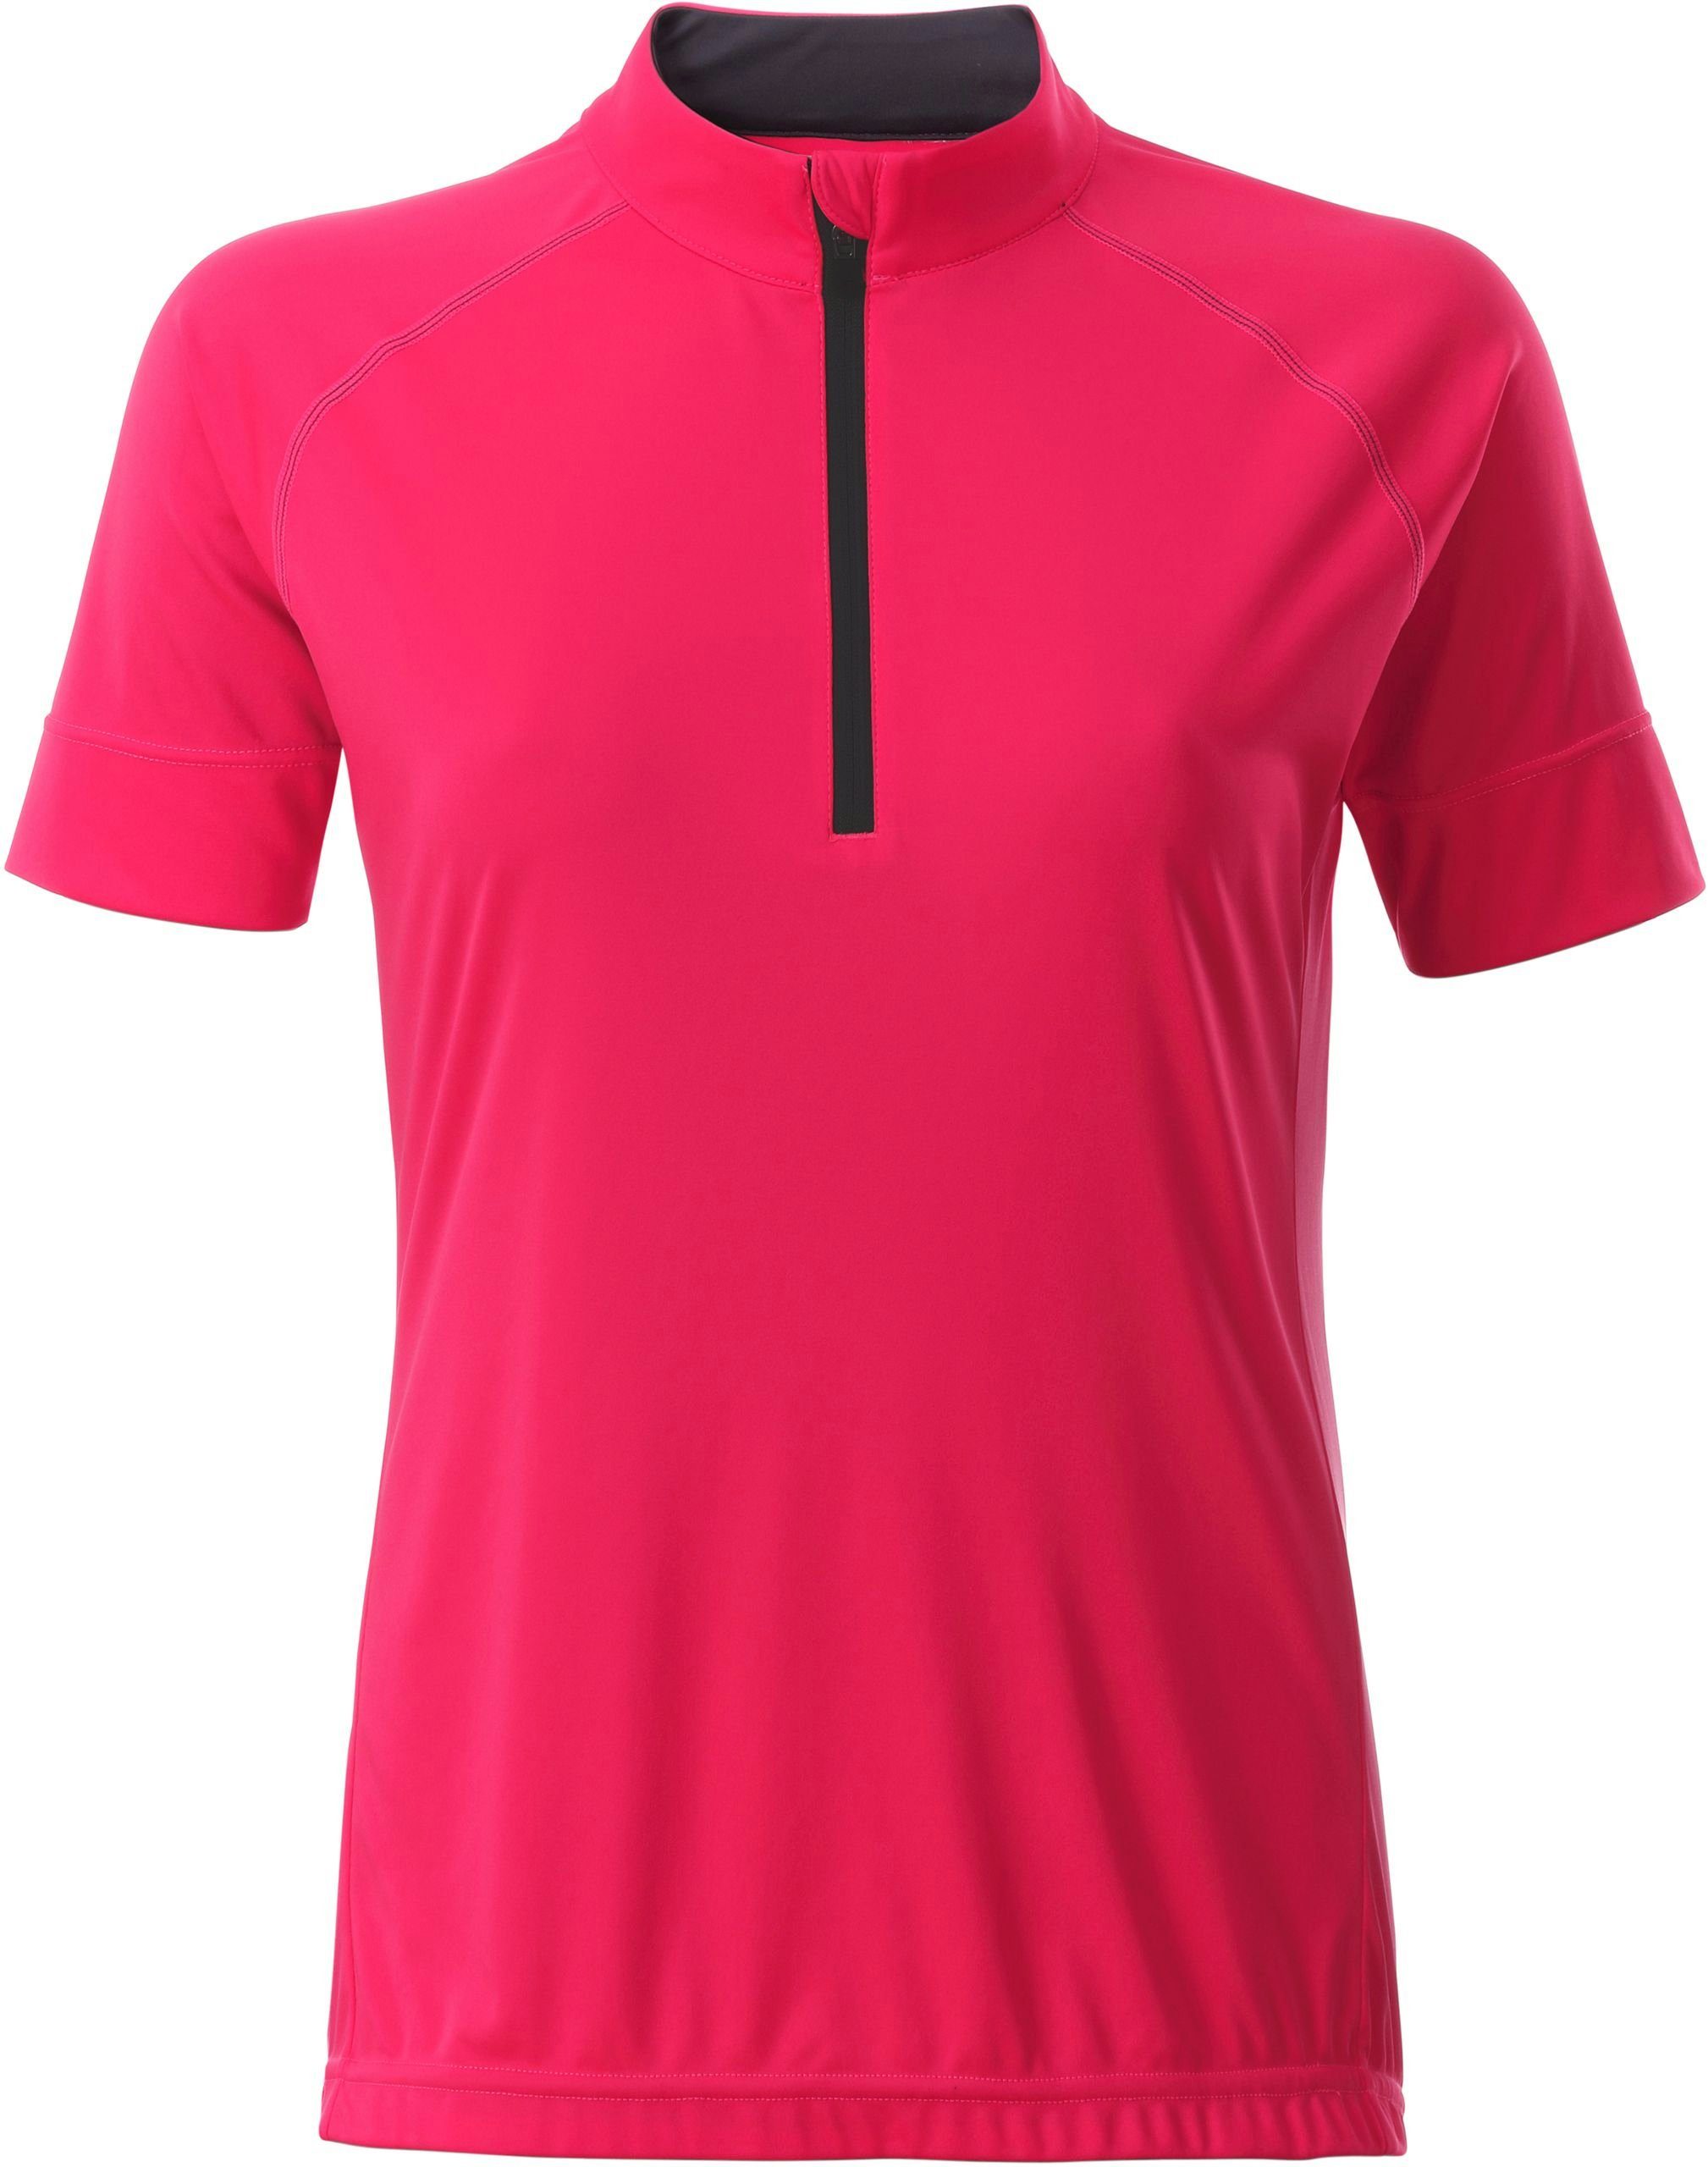 Nicholson FaS50513 & James Fahrradshirt bright Trainingsshirt pink/titan Radtrikot